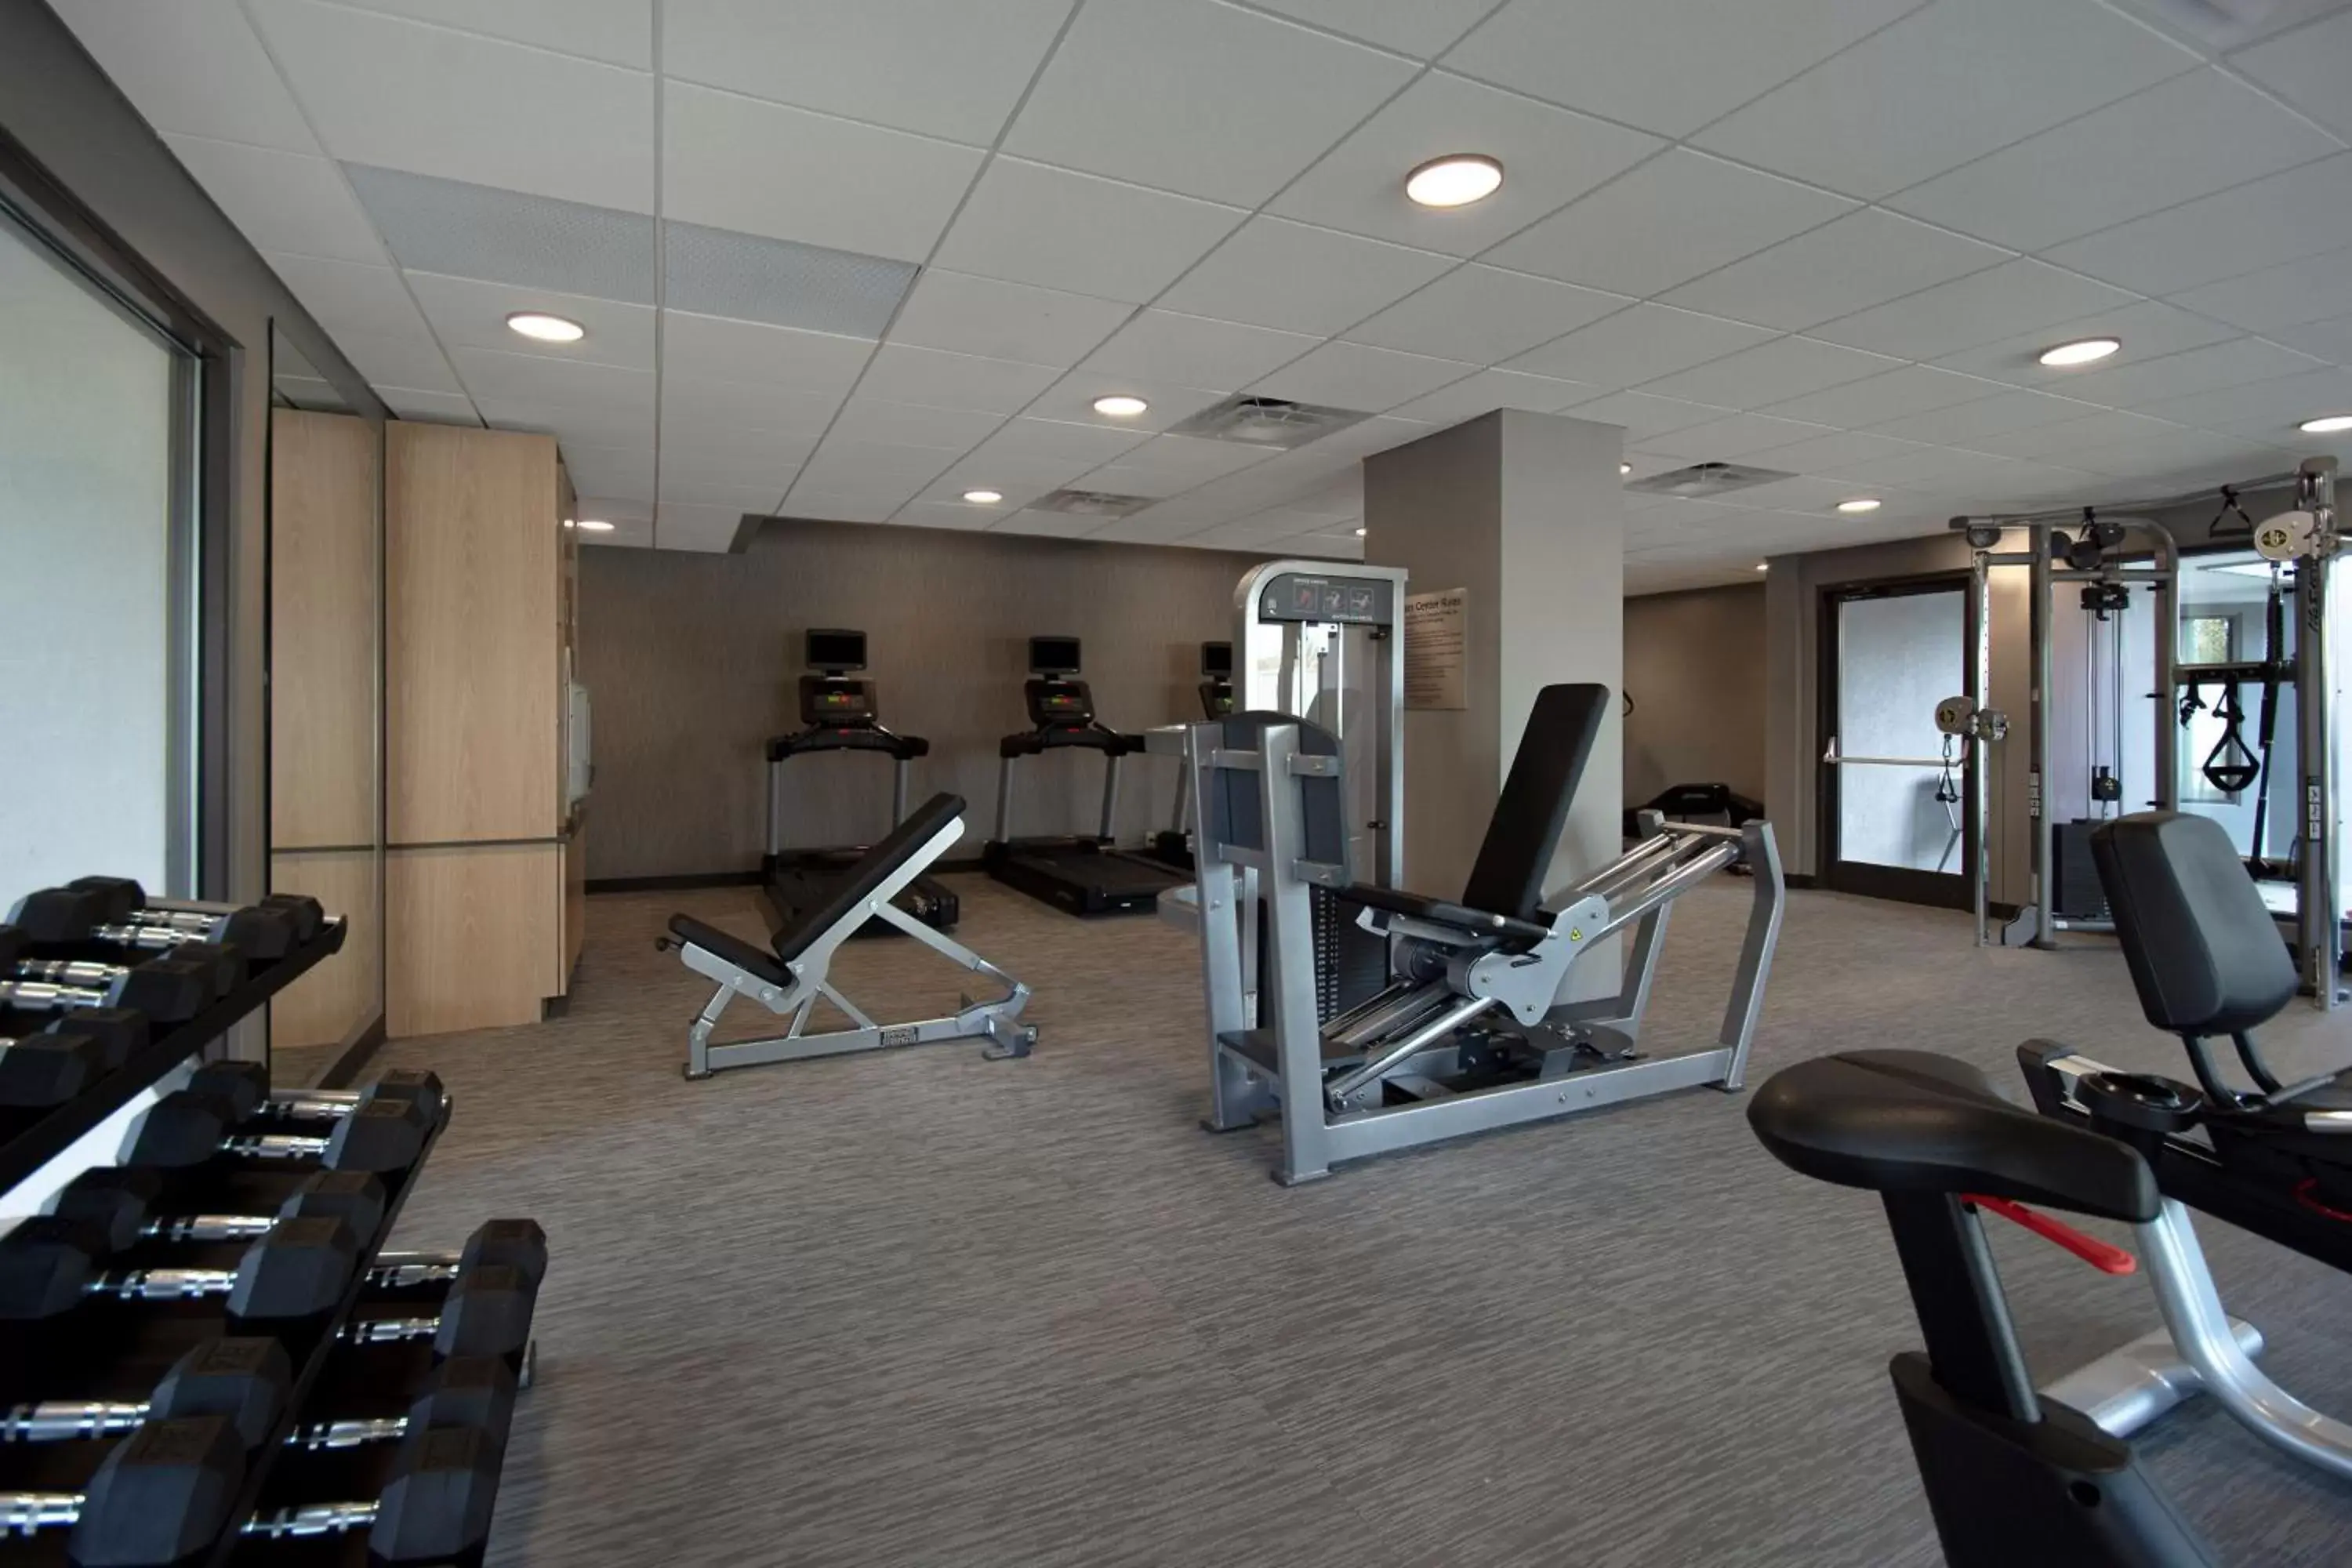 Fitness centre/facilities, Fitness Center/Facilities in Courtyard by Marriott Cincinnati Airport